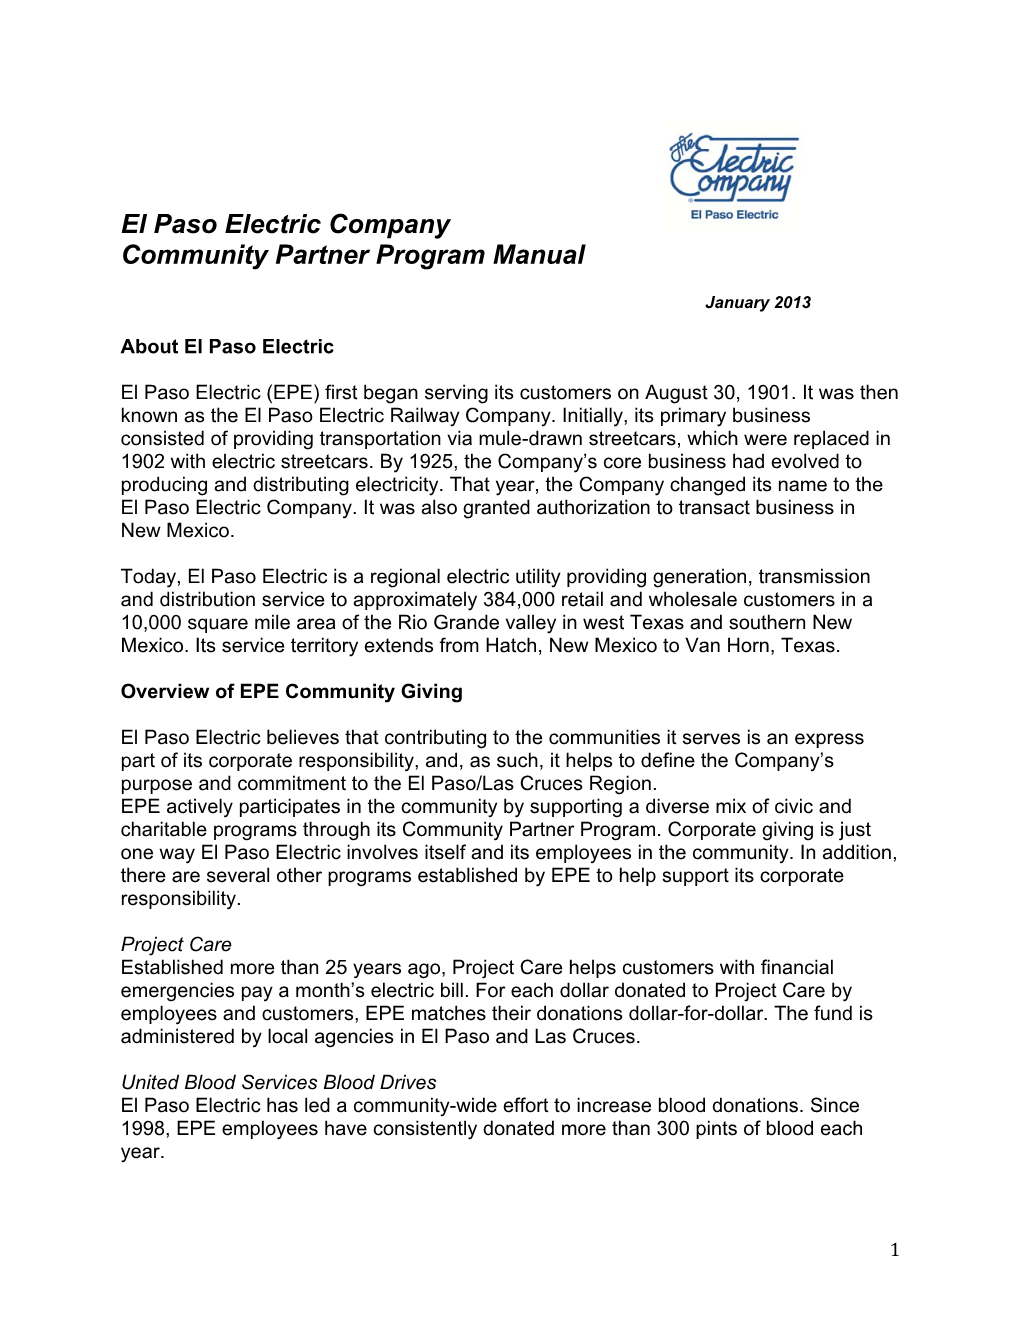 El Paso Electric Company Community Partner Program Manual